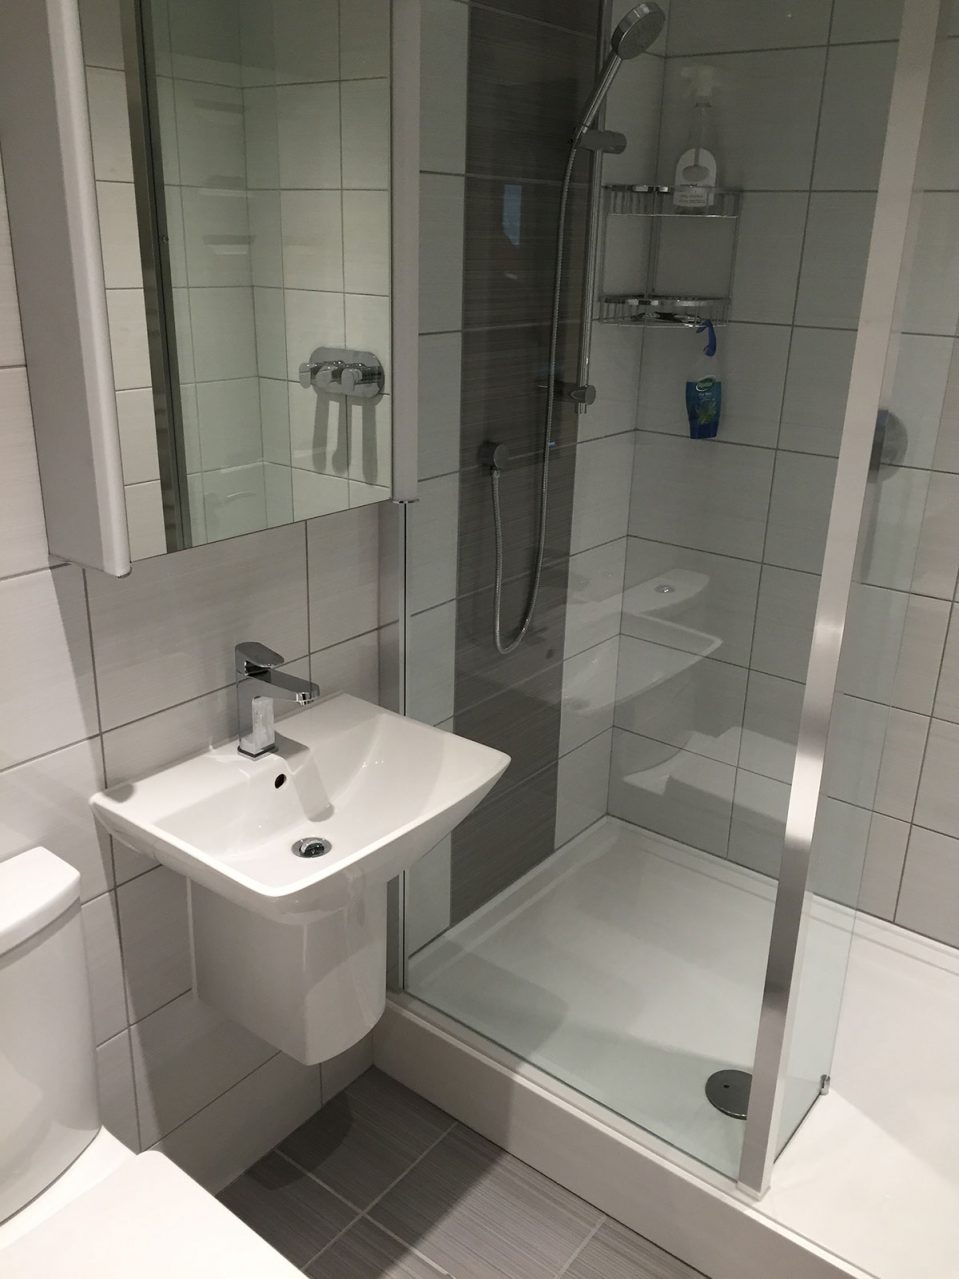 Shower & sink unit